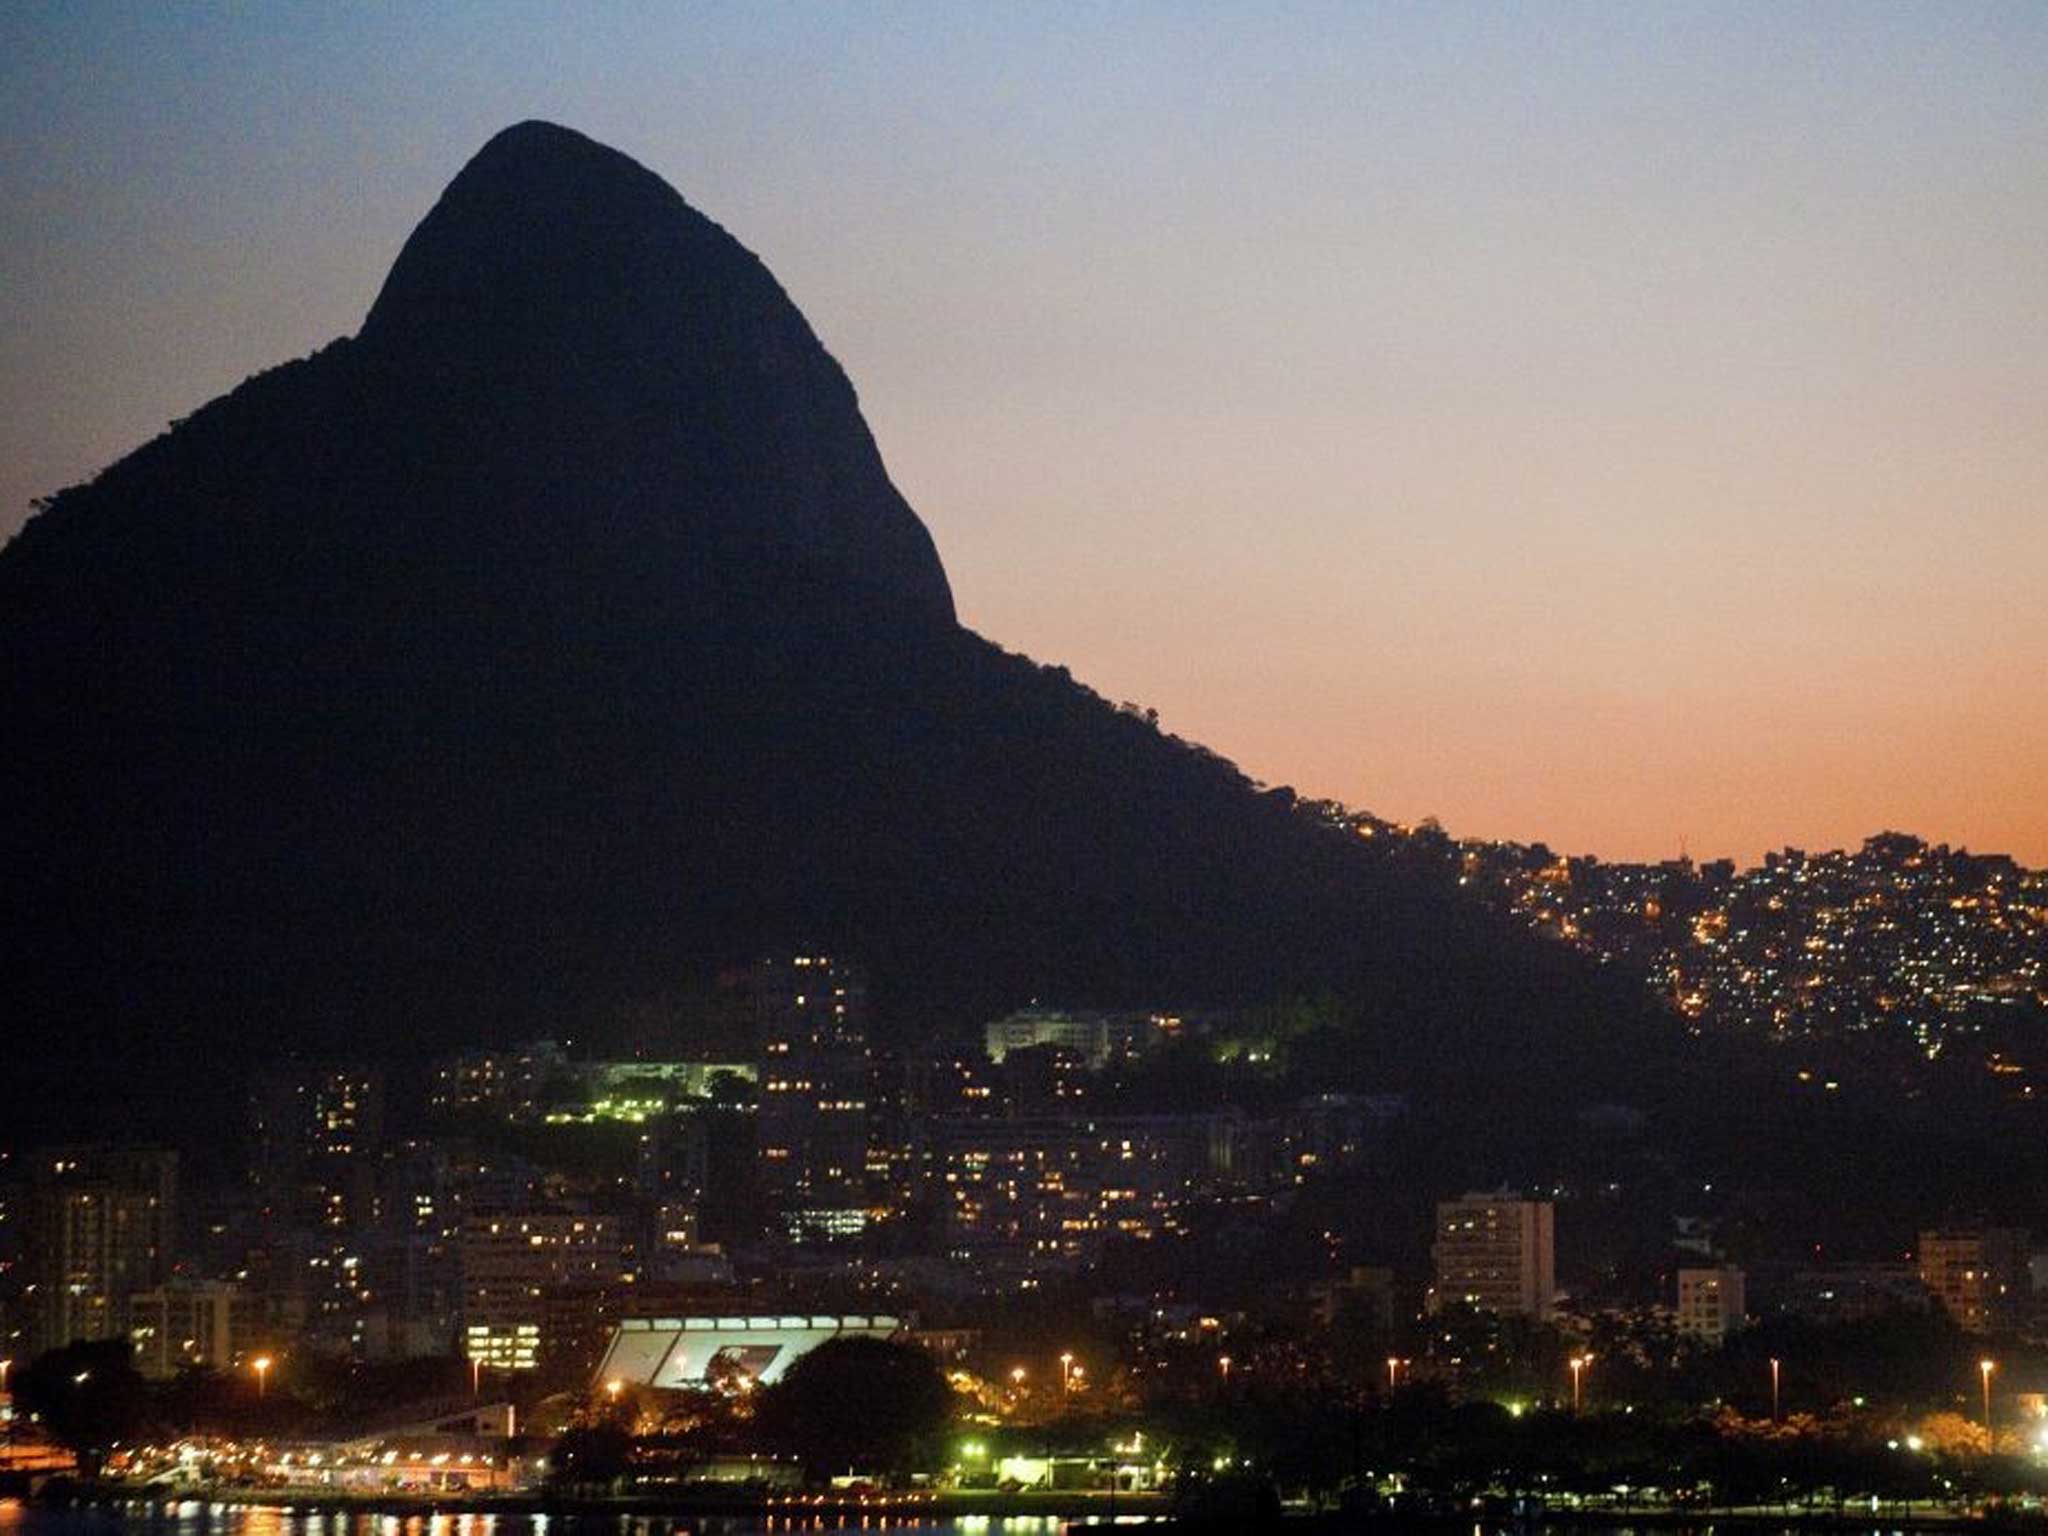 The sun sets over Rio